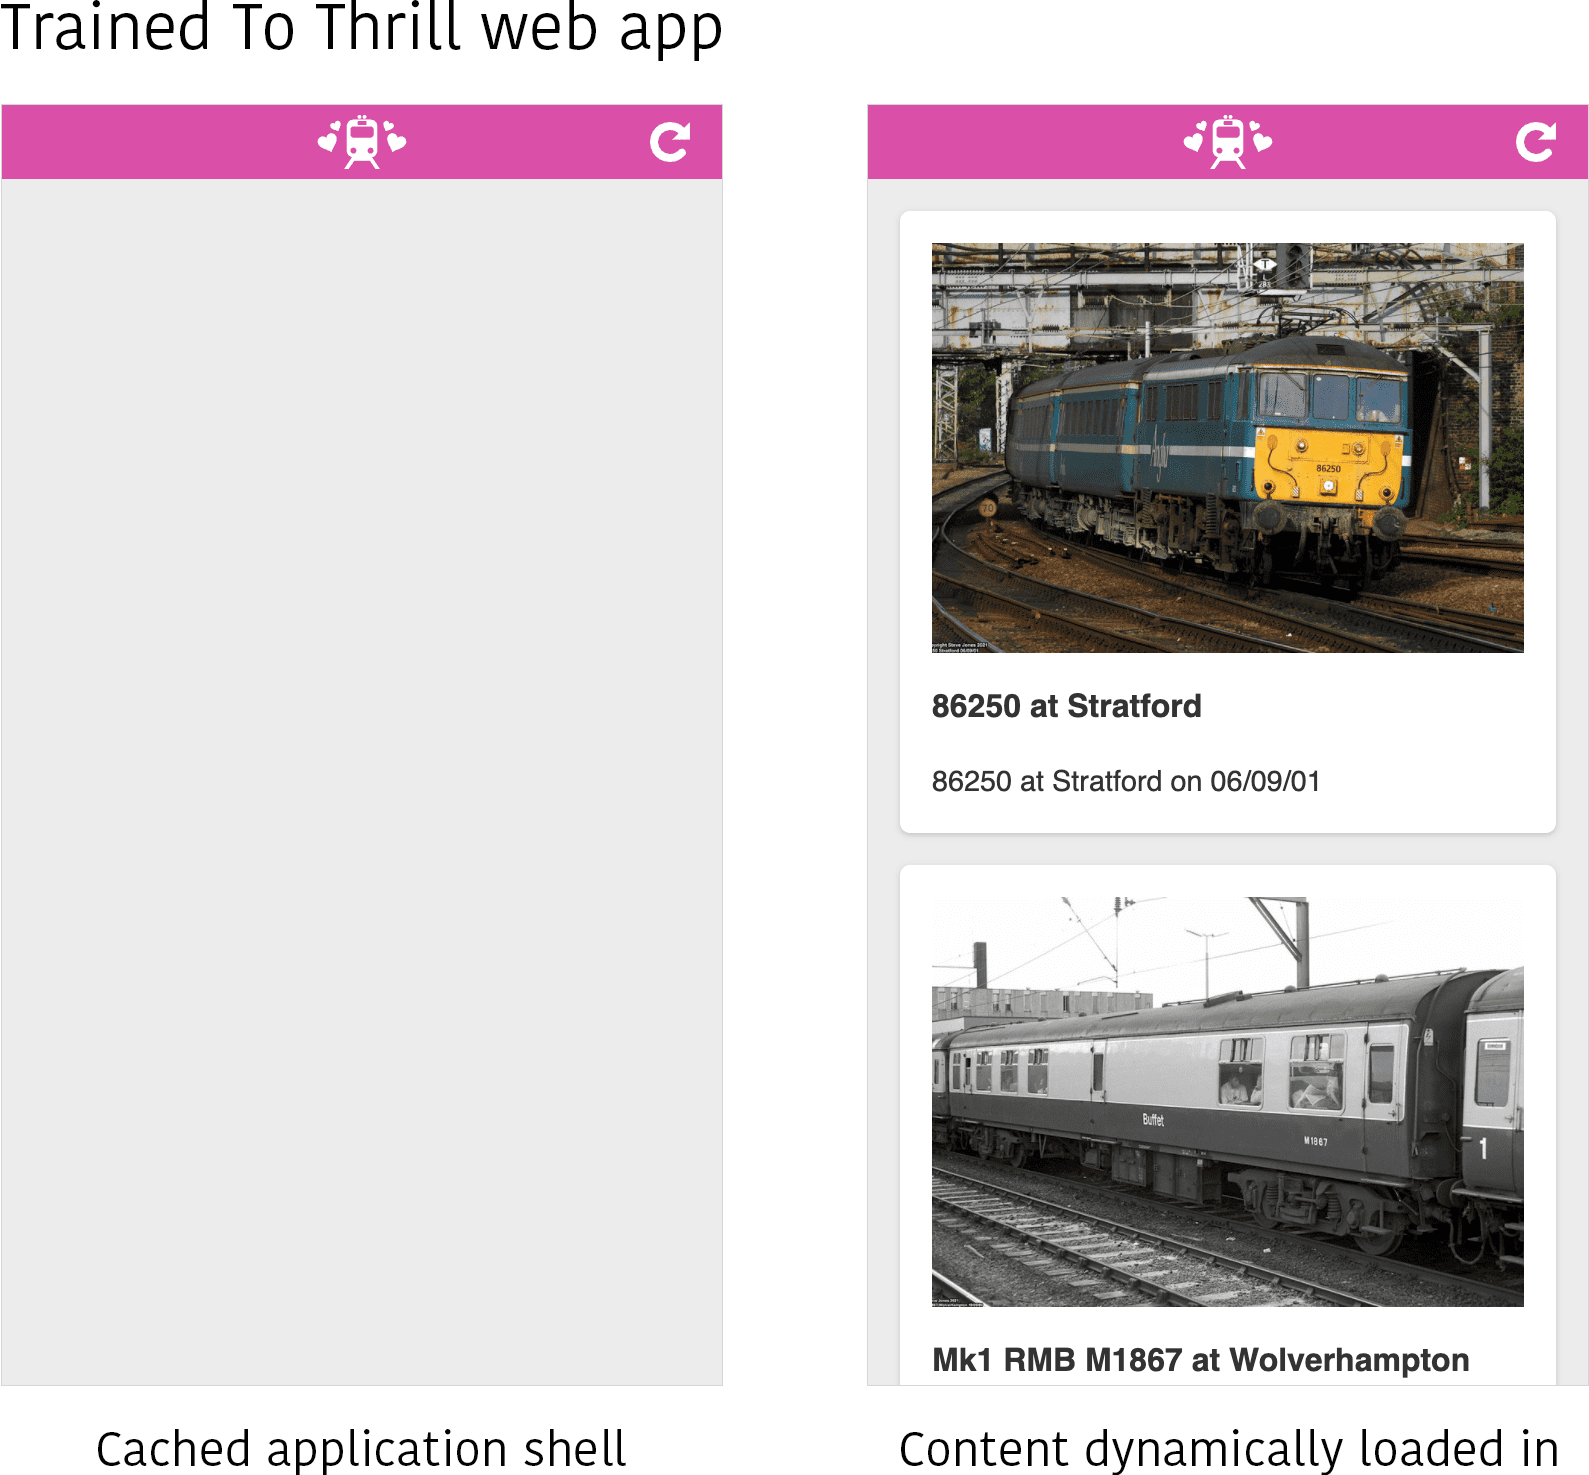 Trained to Thrill Web 应用处于两种不同状态的屏幕截图。在左侧，仅显示缓存的应用 Shell，没有填充任何内容。在右侧，内容（一些火车的几张照片）动态加载到应用 Shell 的内容区域。